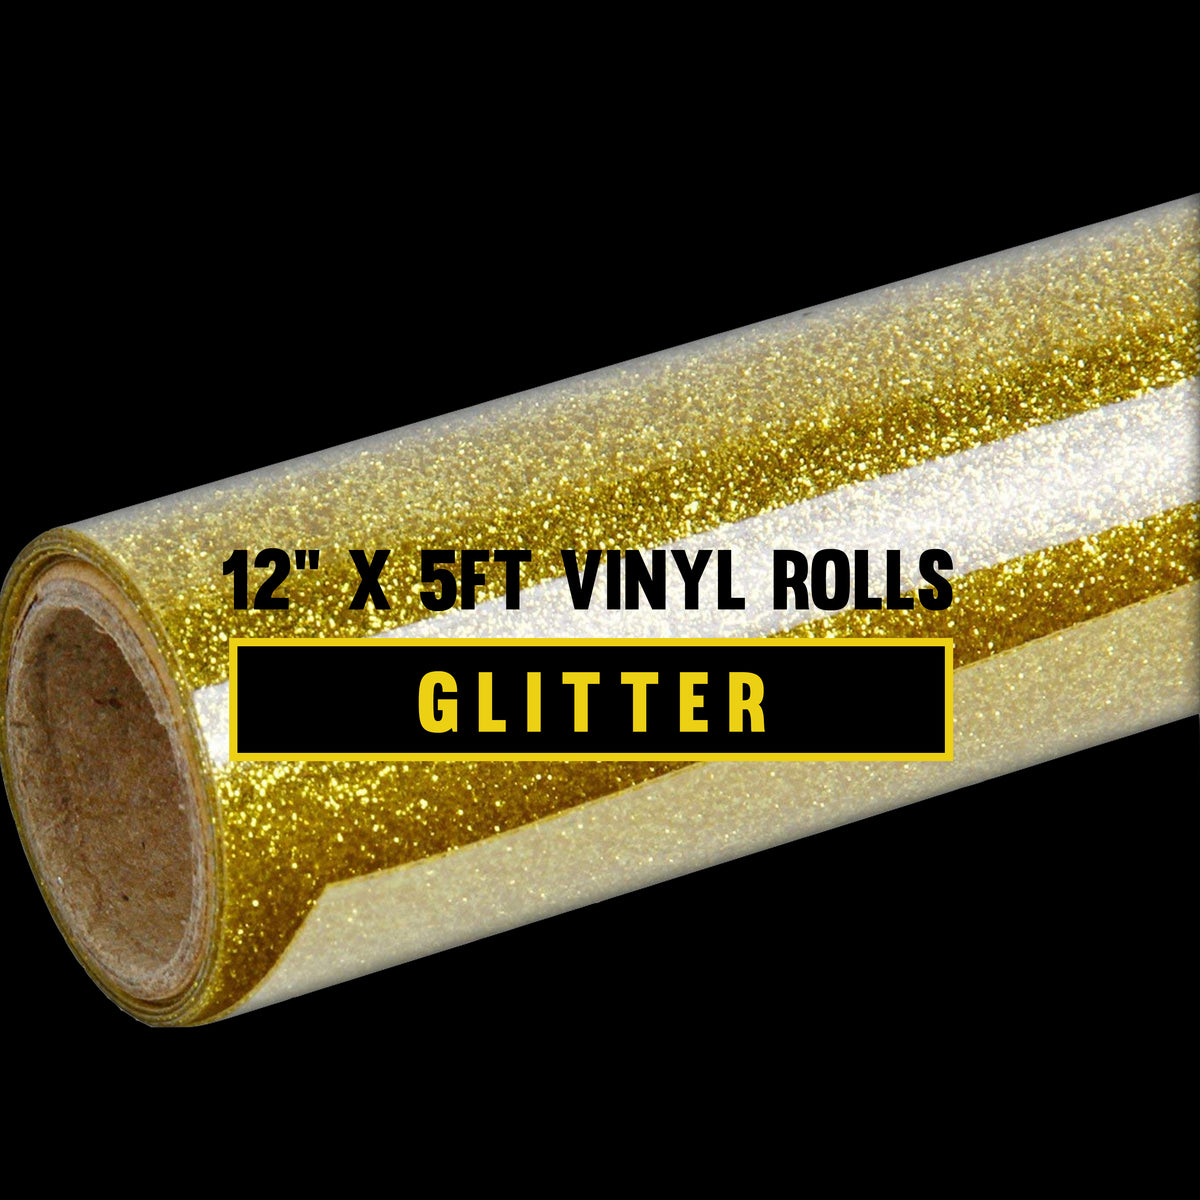 3 FT Roll - Black Iron on Vinyl Glitter